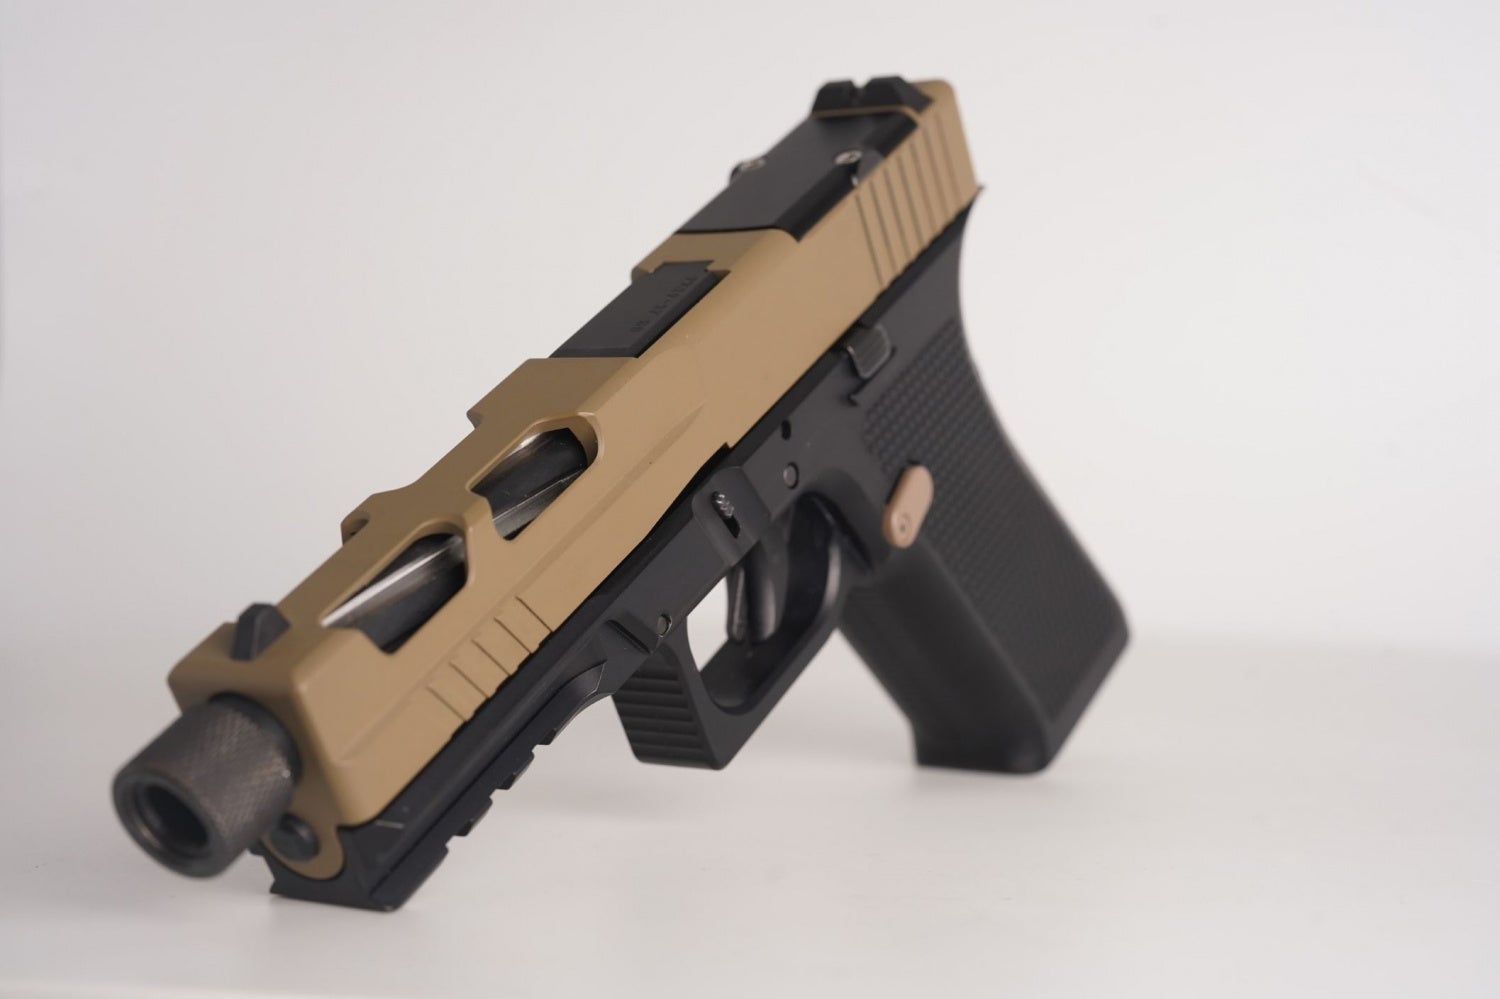 The NEW Bear Creek Arsenal GENES1S 9mm Pistol